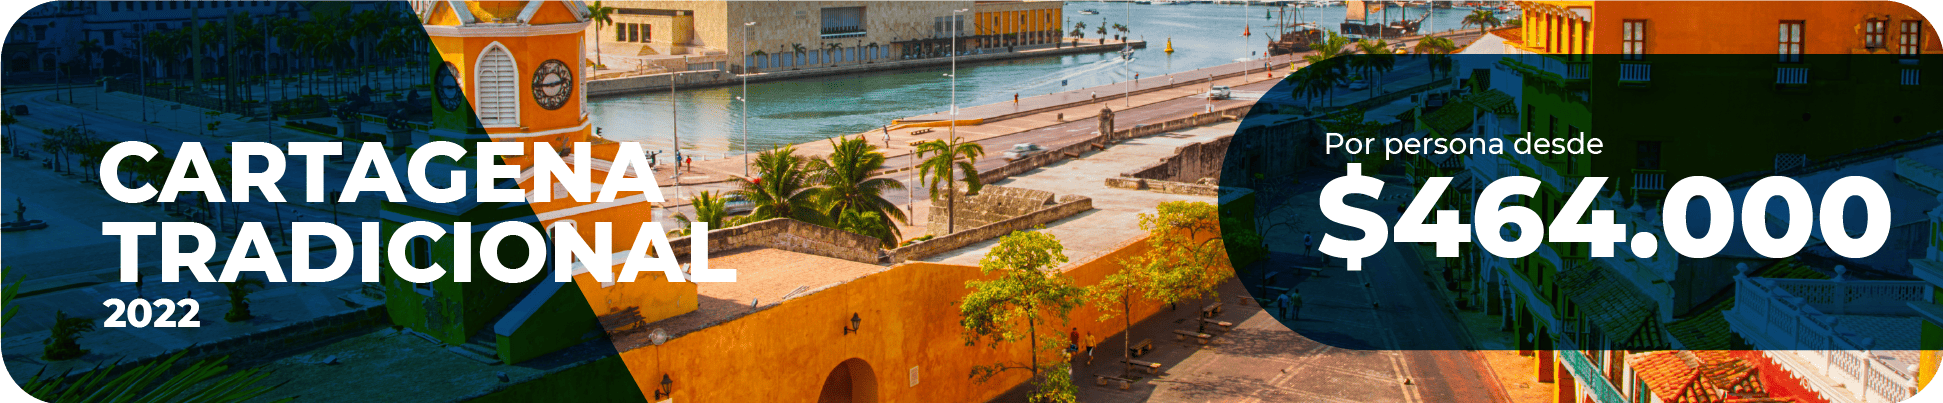 Cartagena tradicional 2022